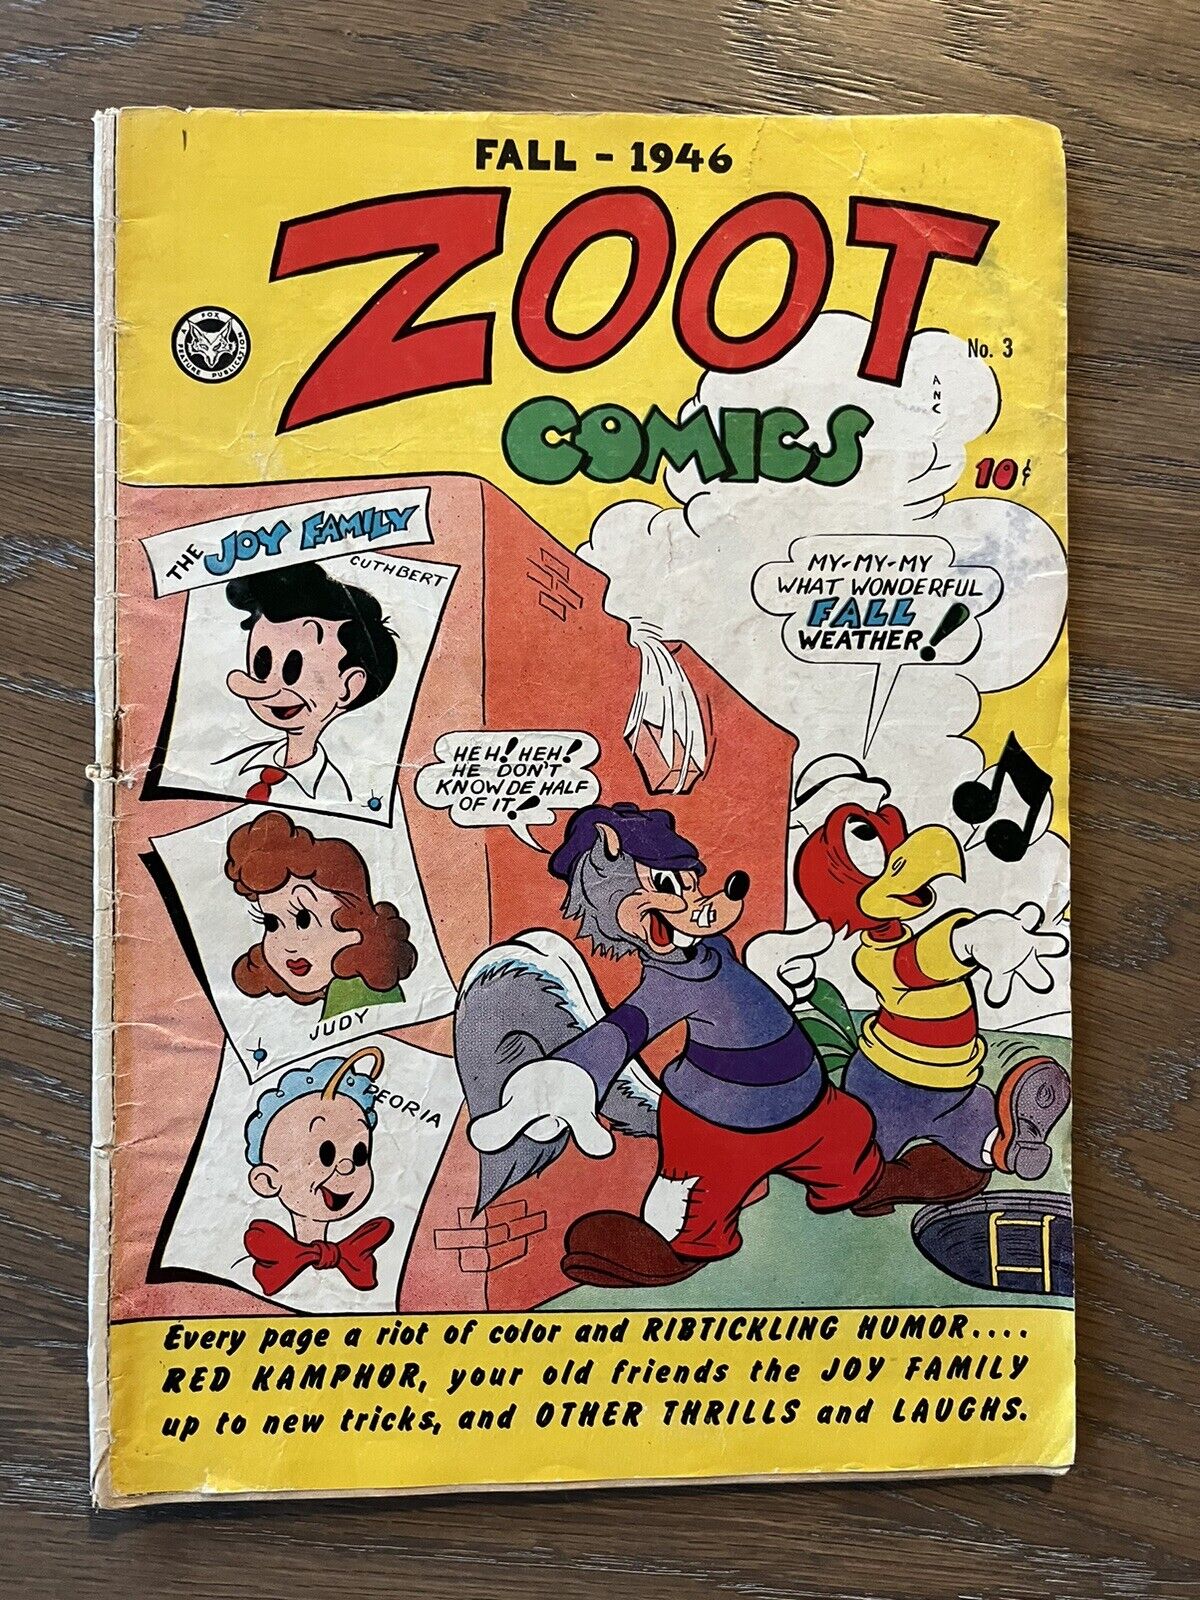 Zoot Comics #3 1946 Fall Red Kamphor Senor Tamale Joy Family HTF Issue Gd? Pics